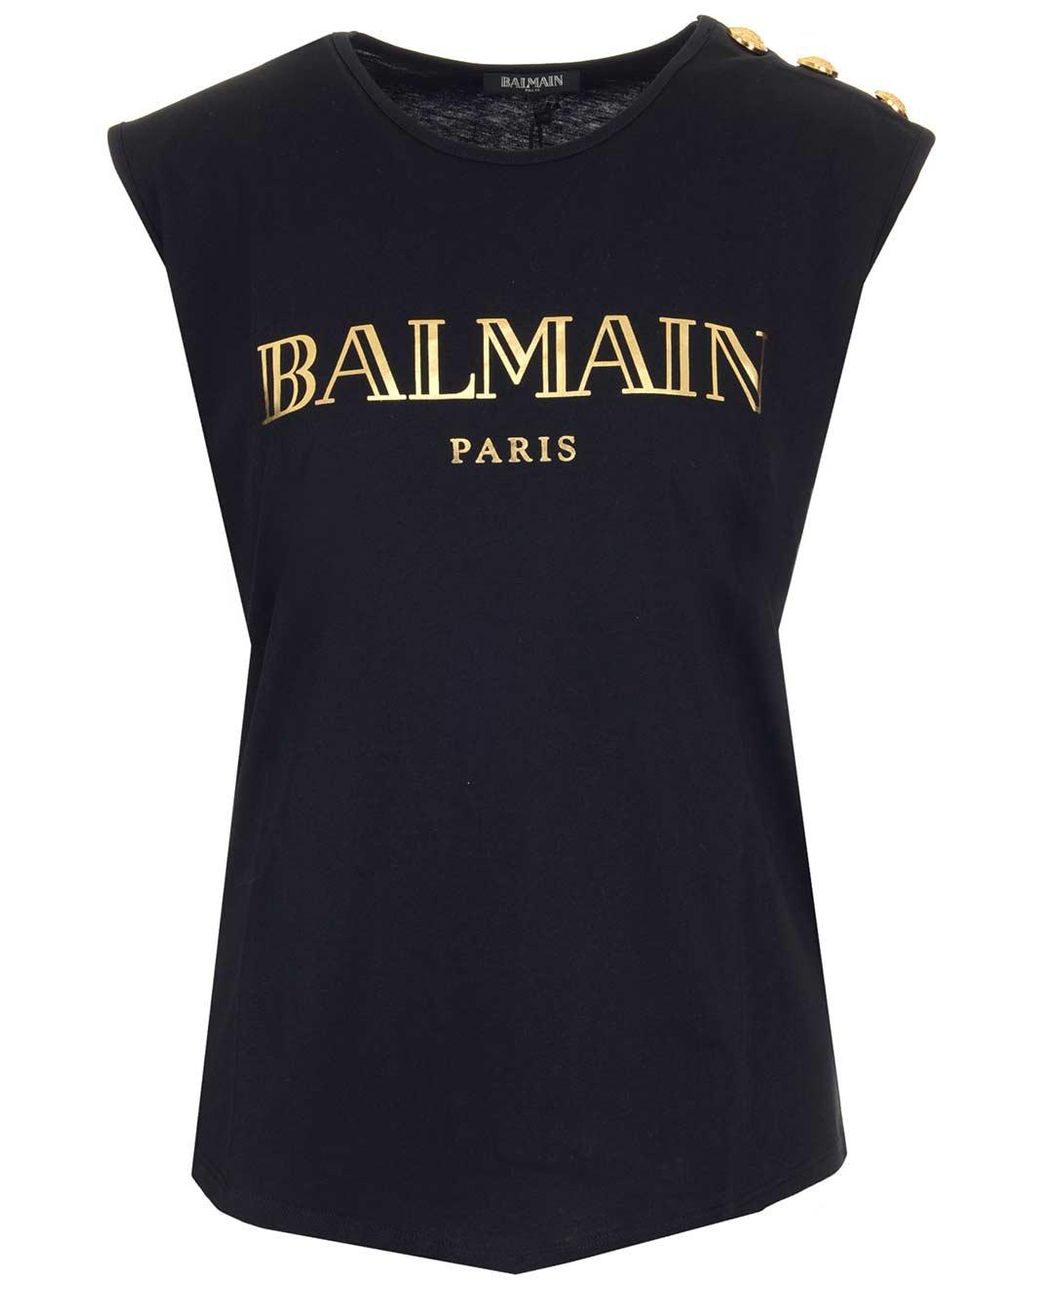 Balmain Cotton Logo Print Sleeveless Top in Black - Lyst